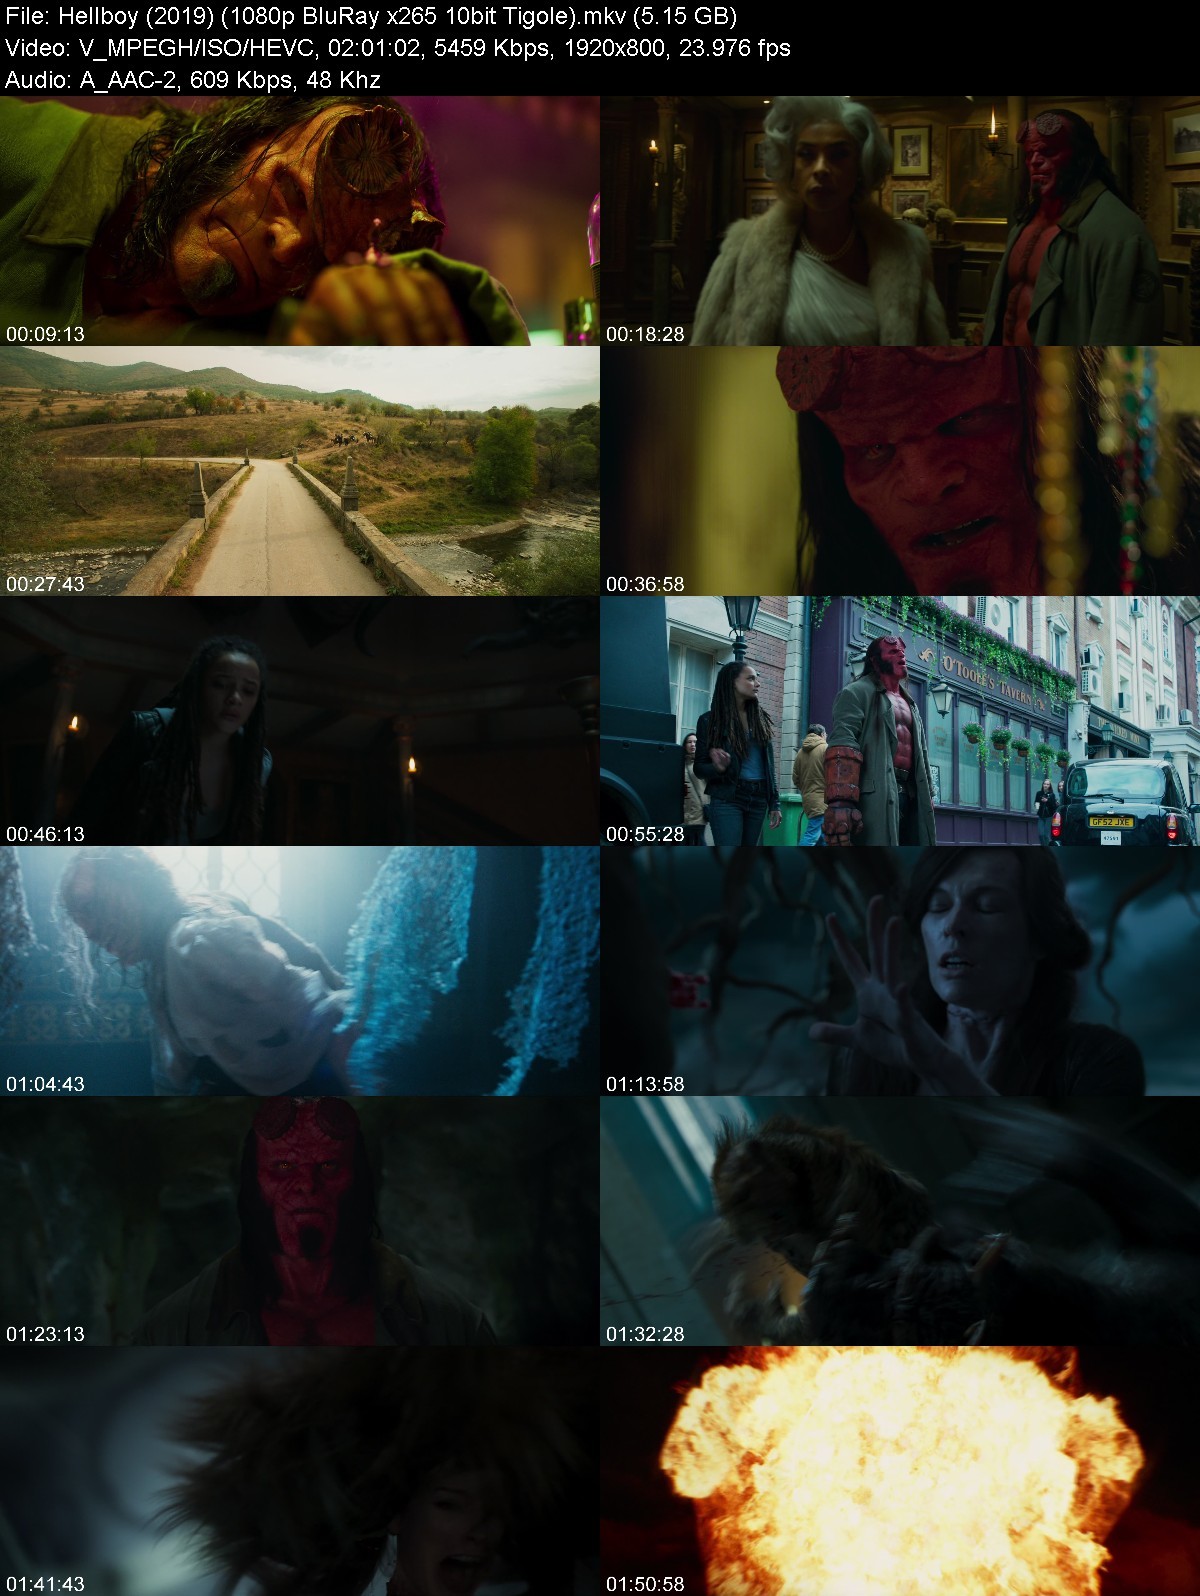 Hellboy (2019) 1080p BluRay x265 HEVC 10bit AAC 7.1 - Tigole